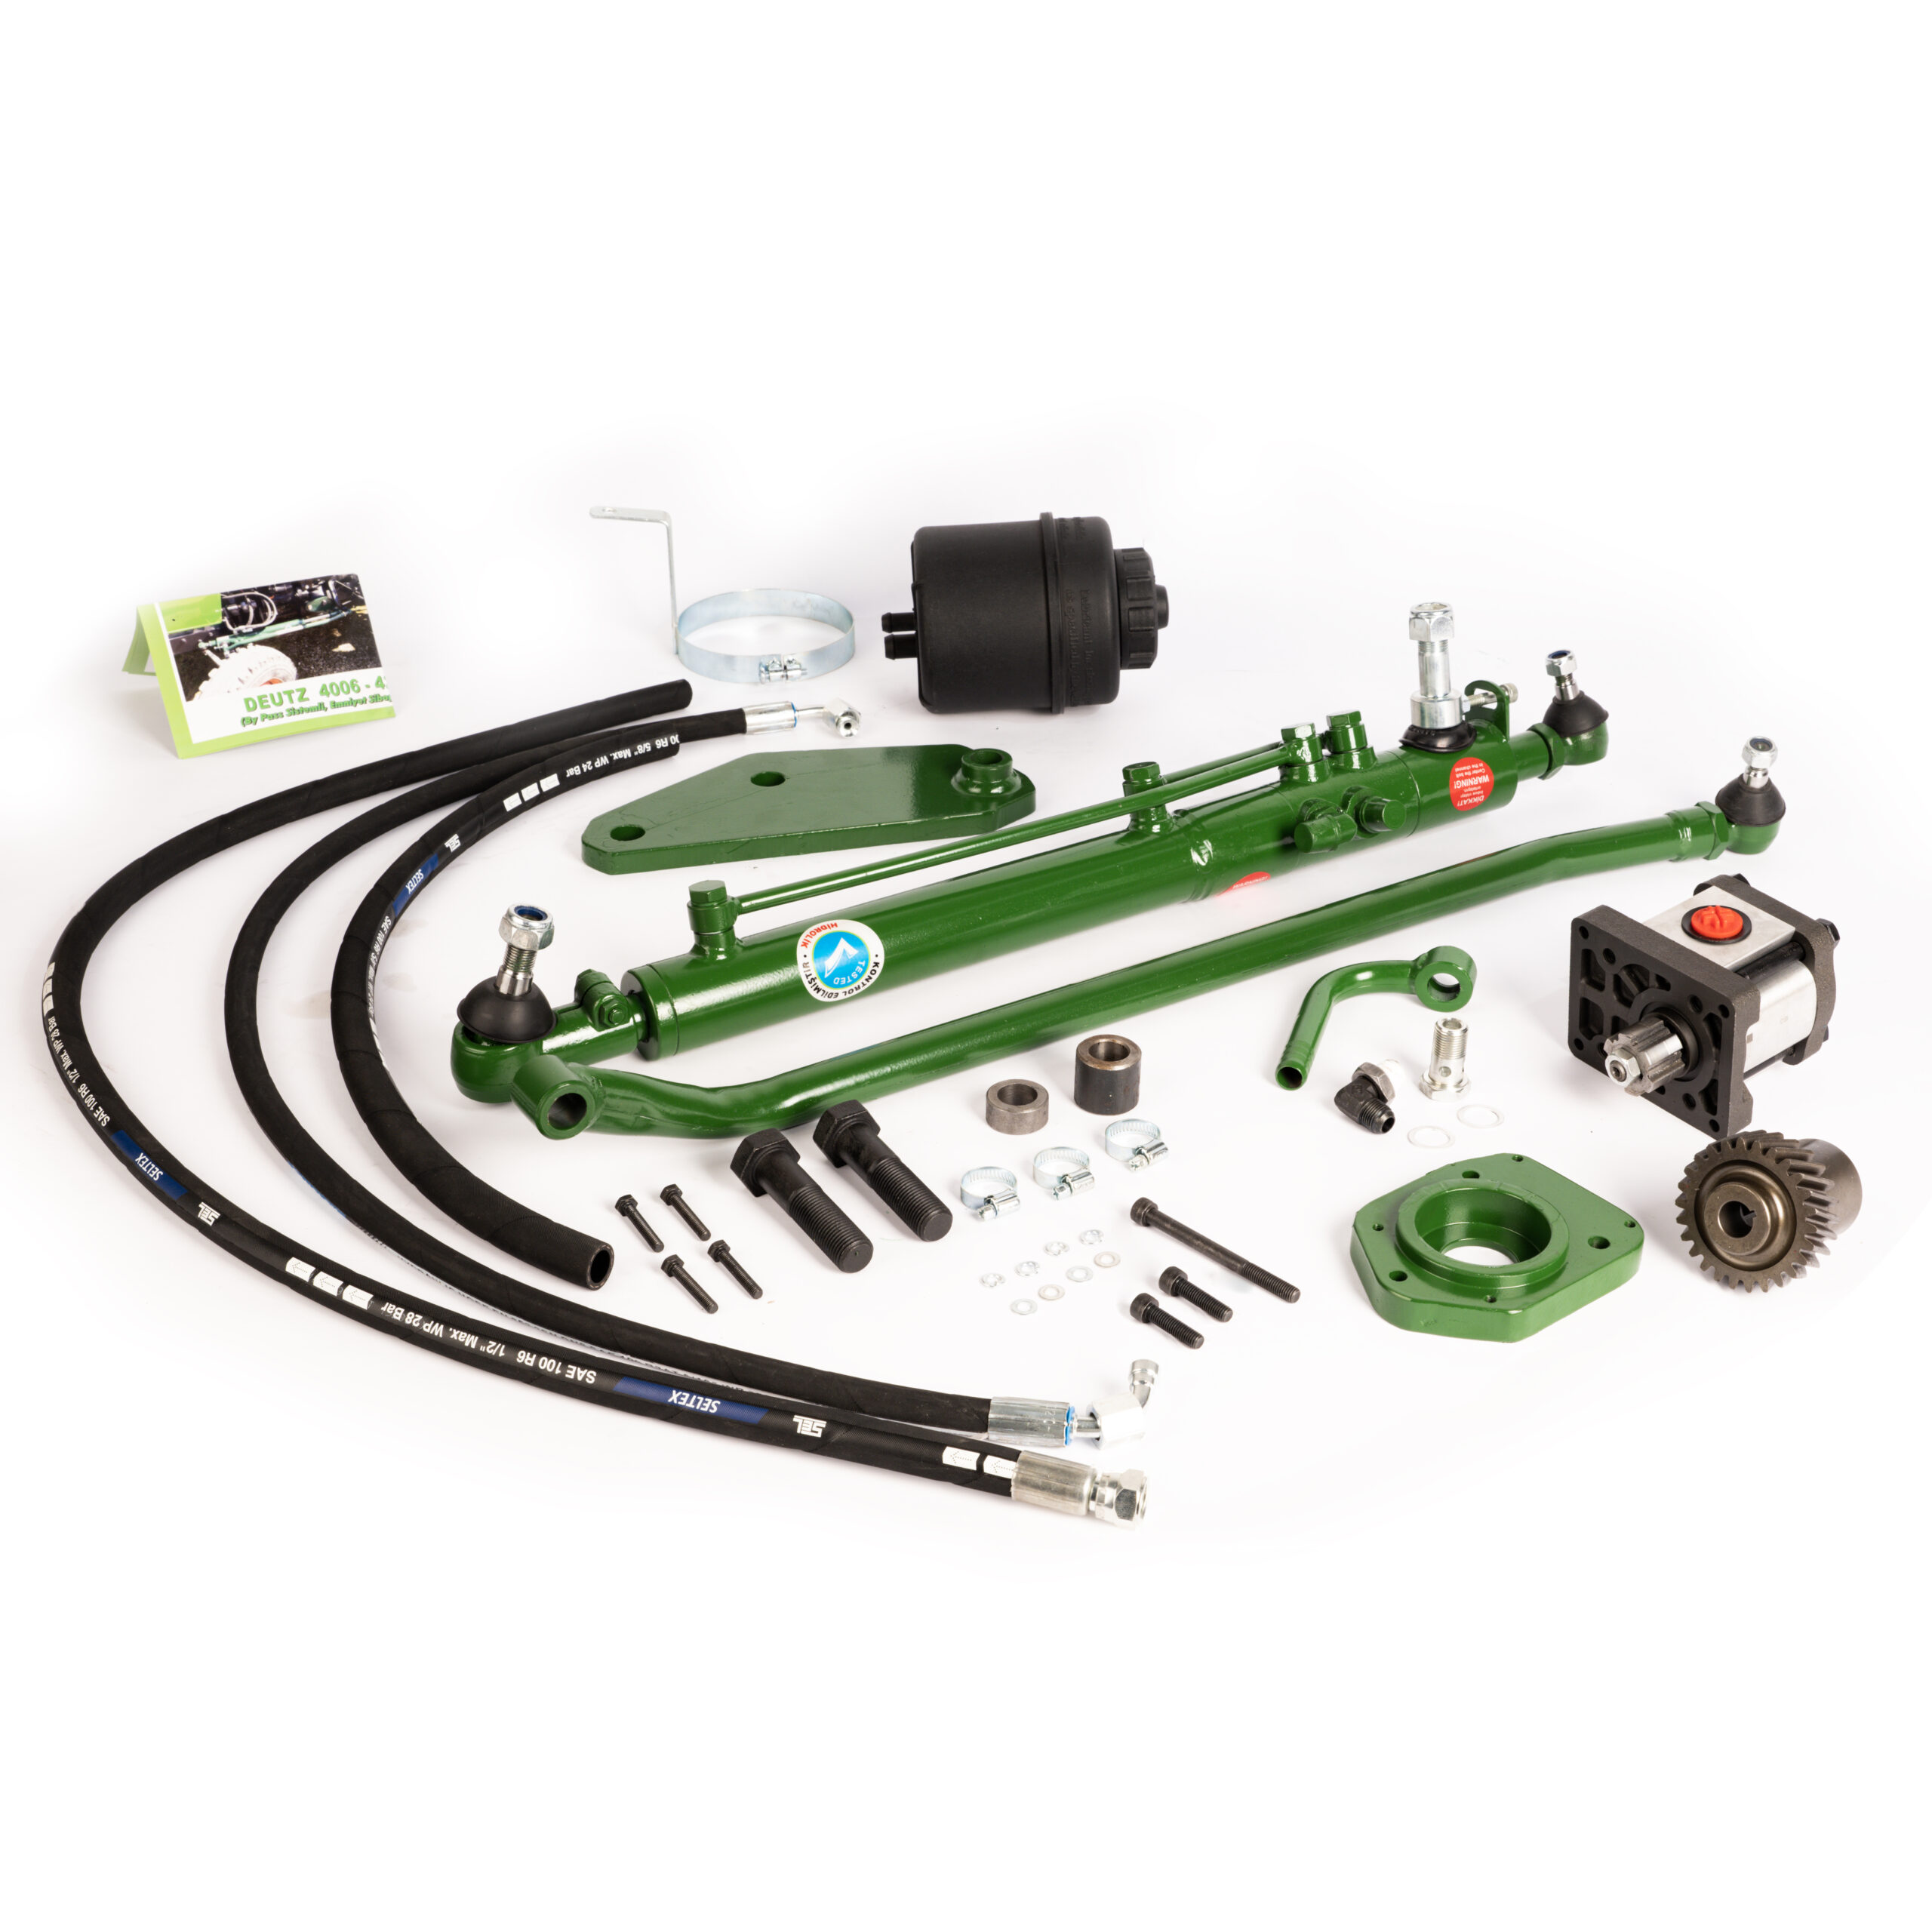 Power Steering Conversion Kit for Deutz 4006 5206